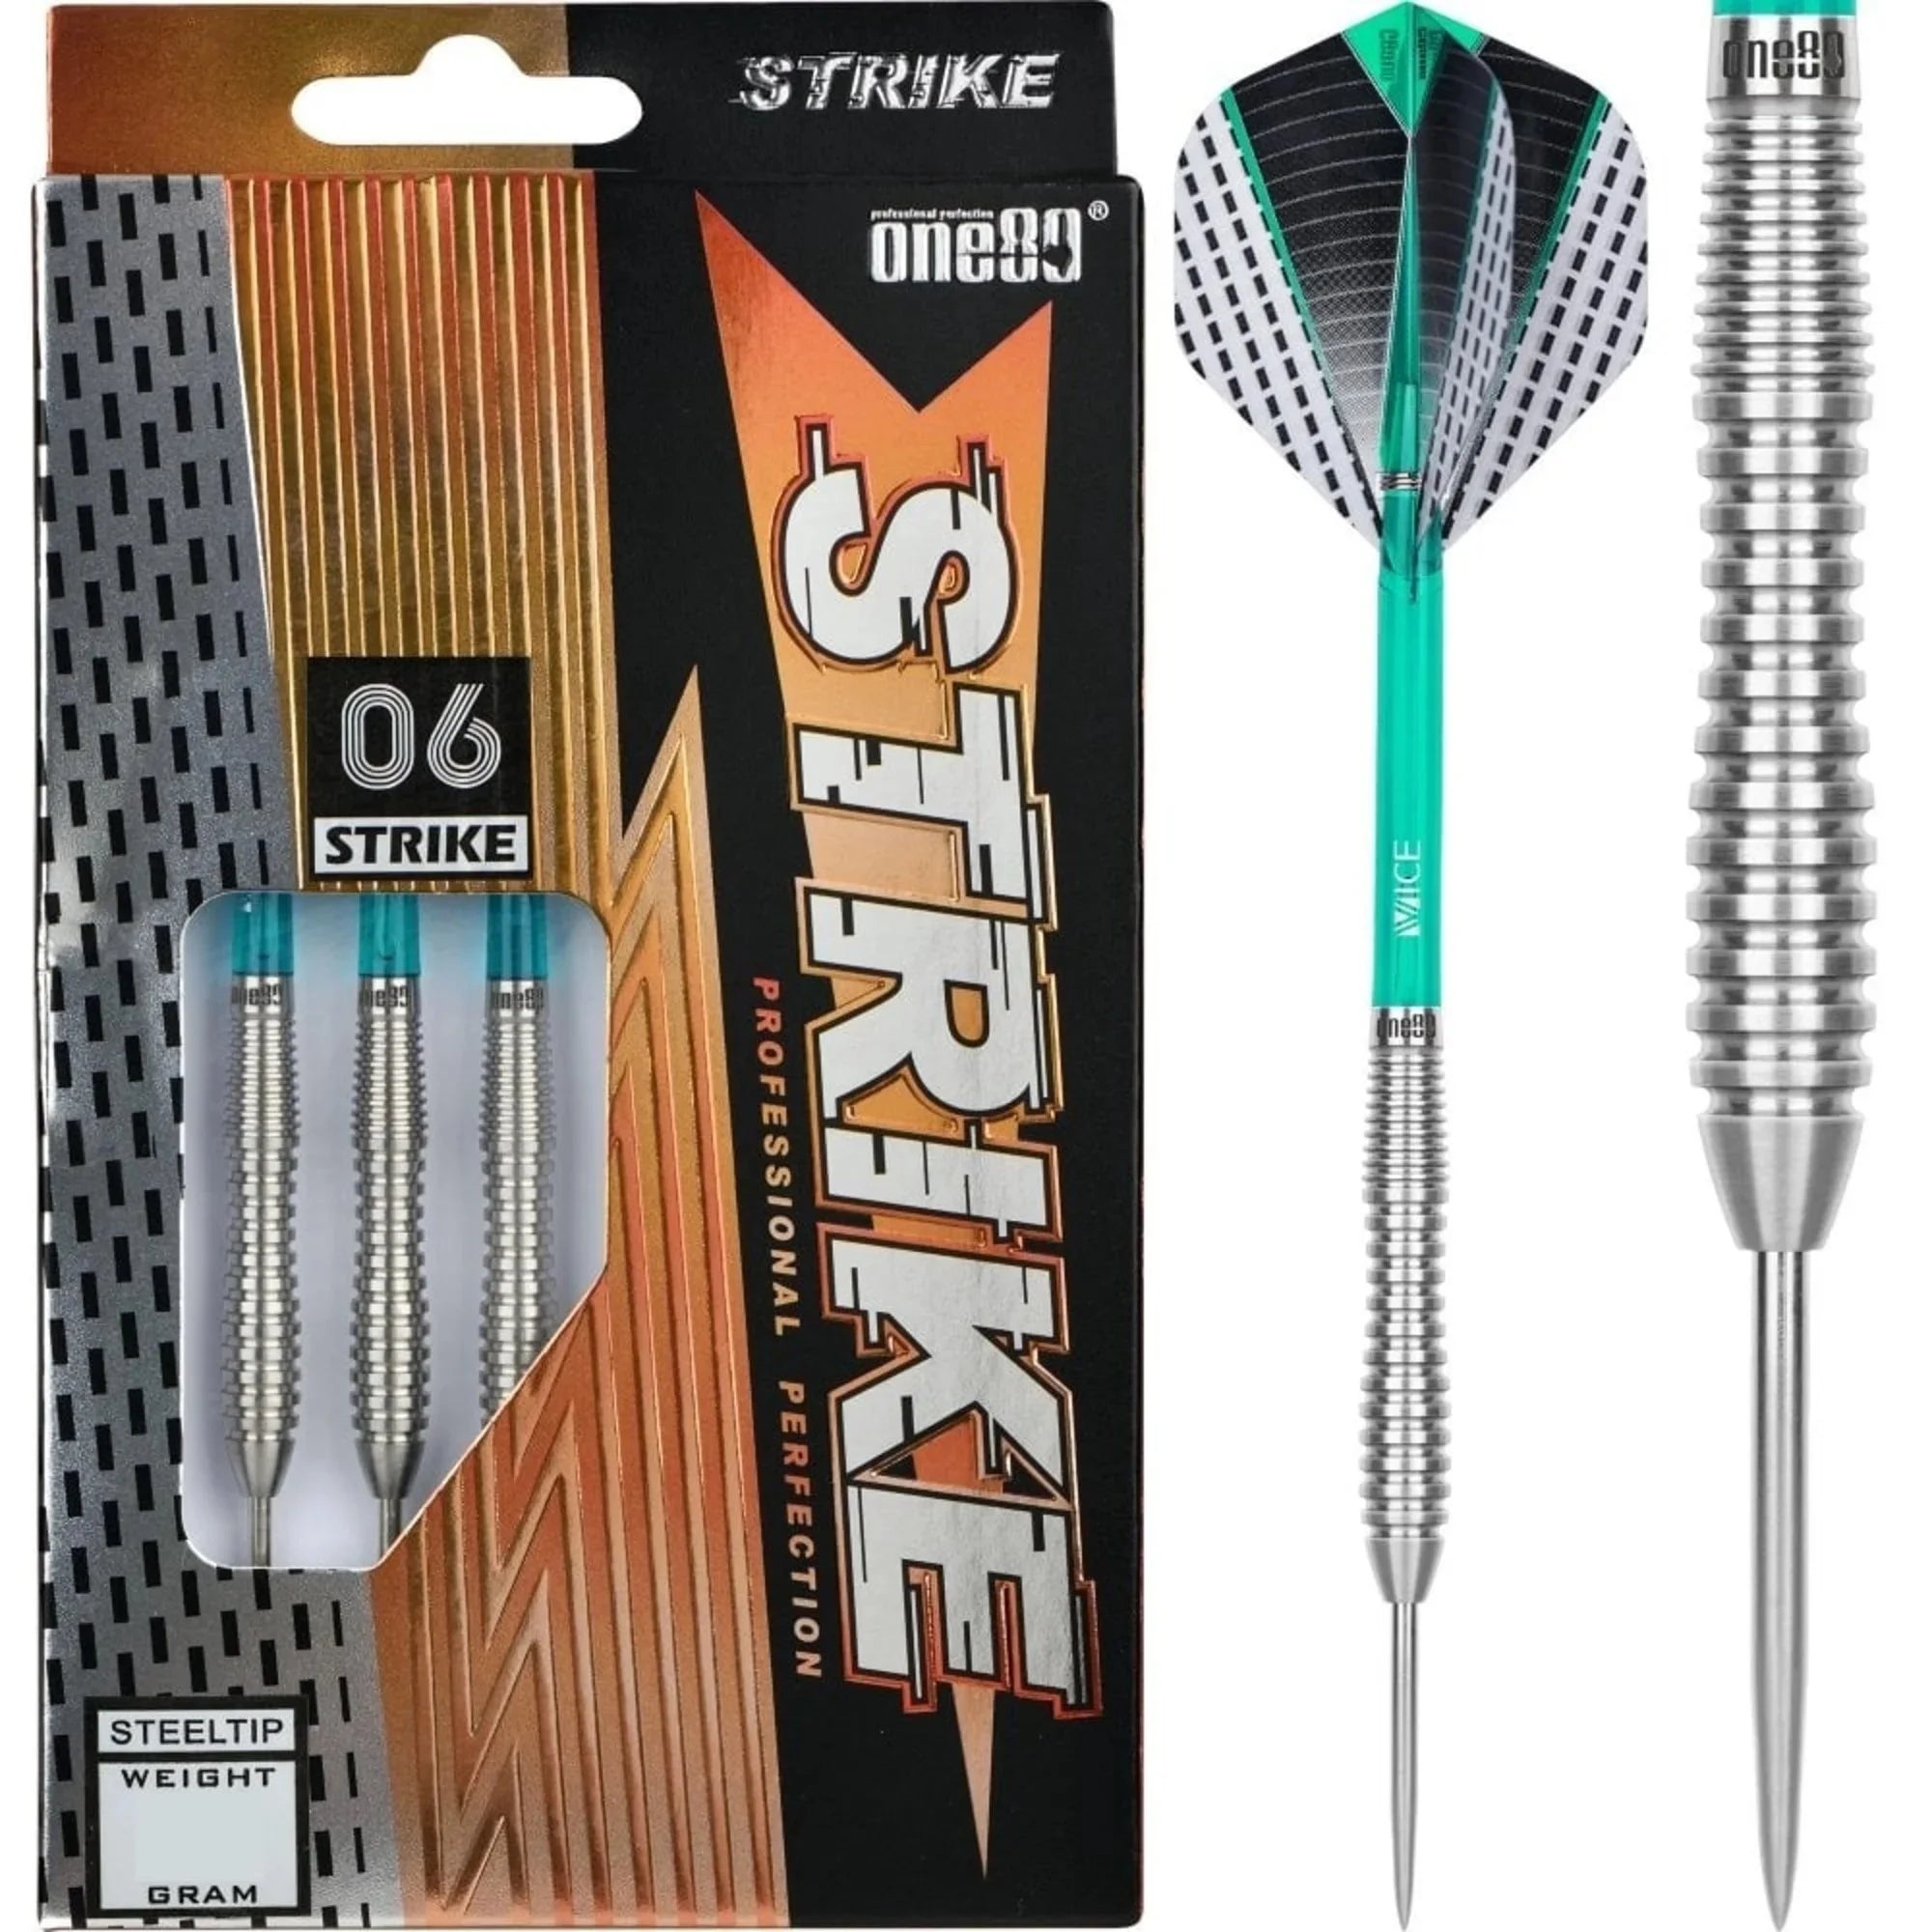 One80 Strike 06 Steel Darts 22g/80%